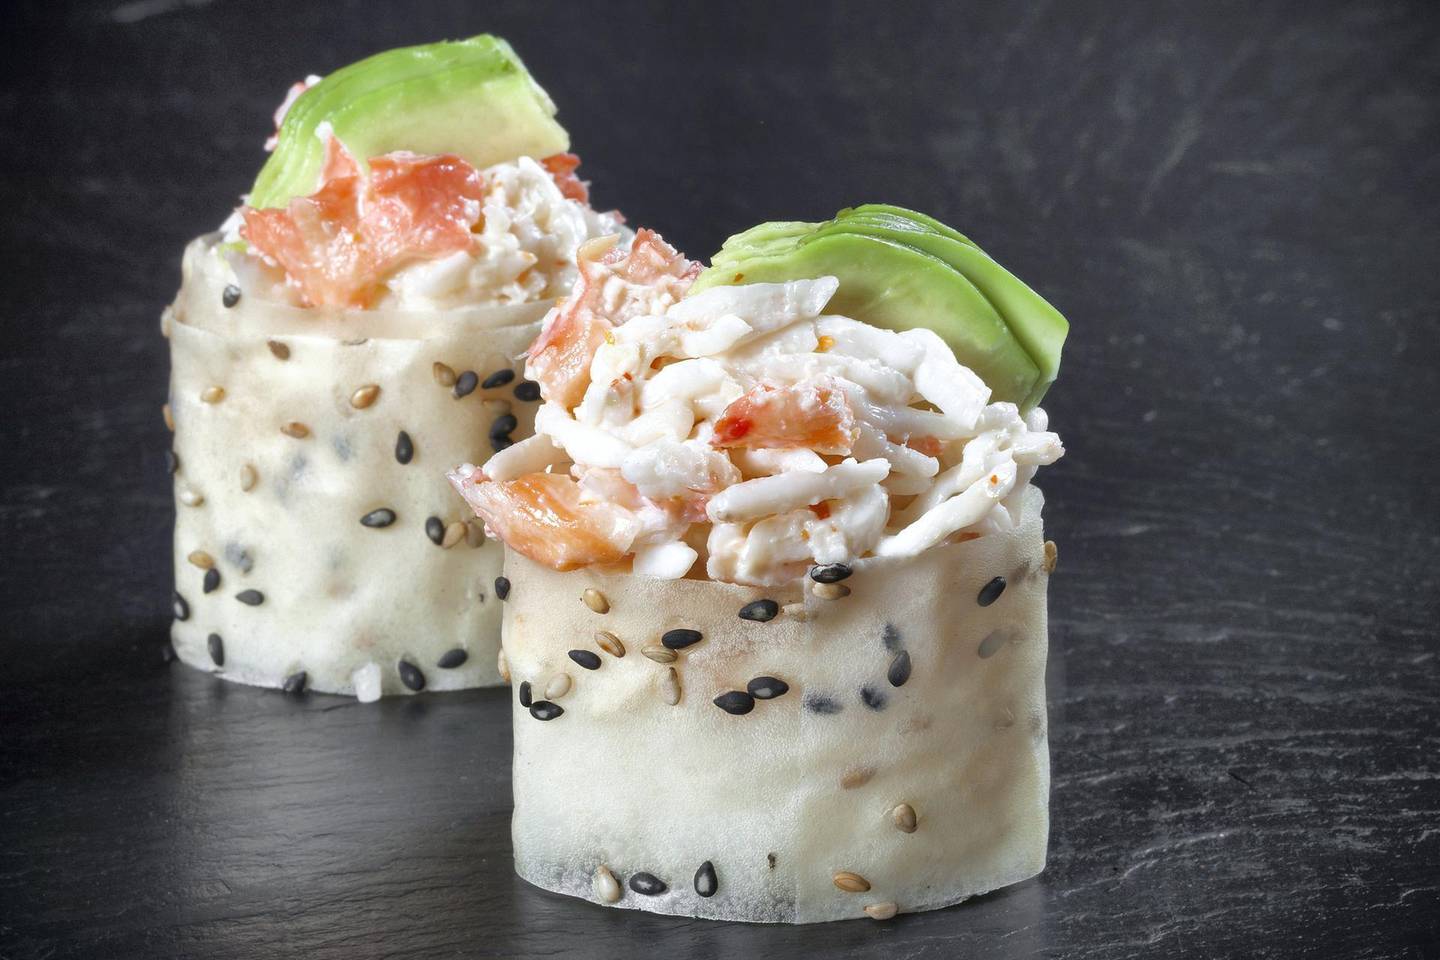 The Alaskan king crab gunkan from 99 Sushi Bar & Restaurant Dubai. Courtesy 99 Sushi